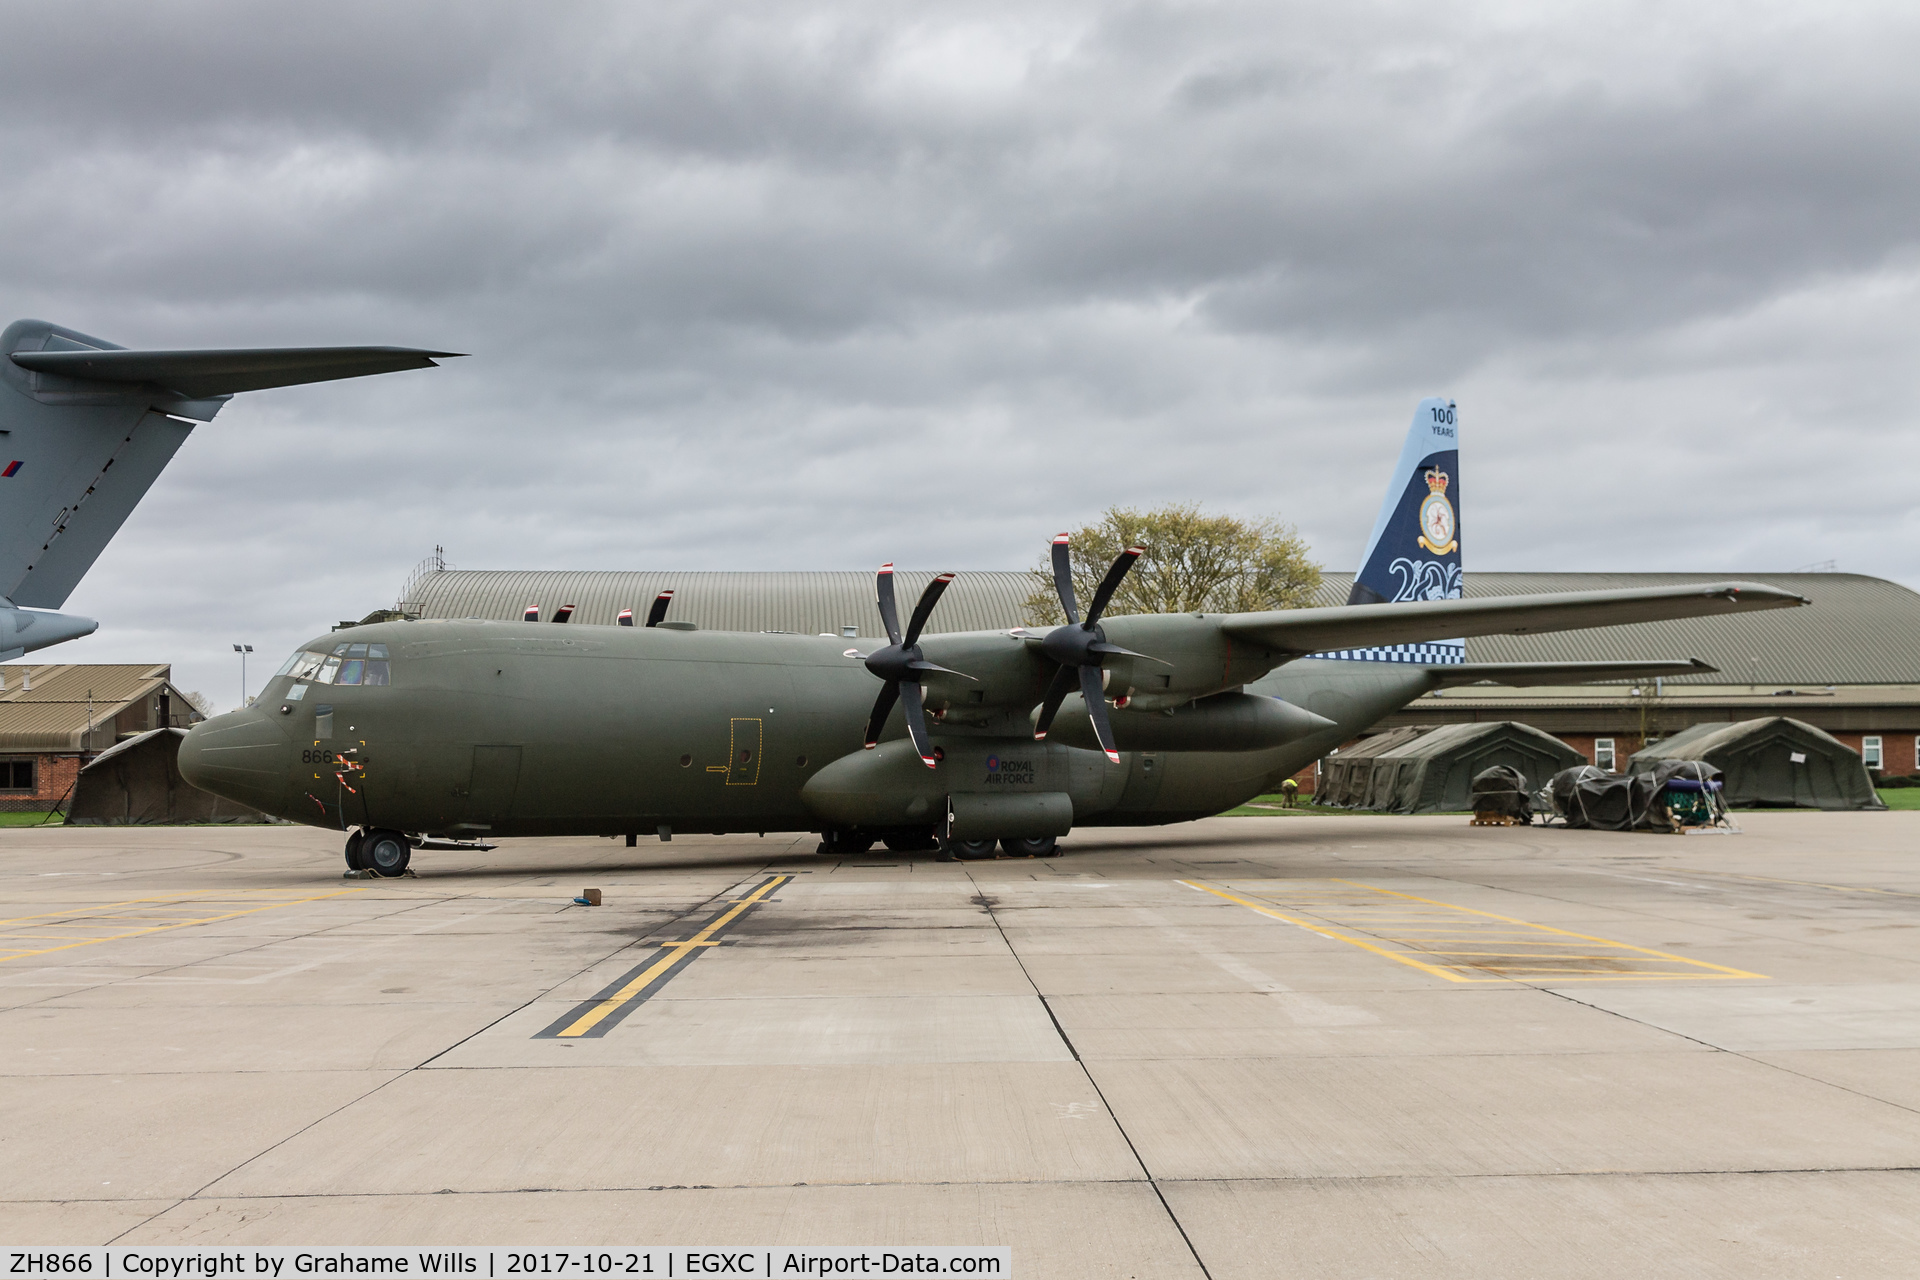 ZH866, 1996 Lockheed Martin C-130J-30 Hercules C.4 C/N 382-5414, Lockheed Hercules C6 ZH866 206 [Reserve] Sqd RAF, Coningsby 21/10/17